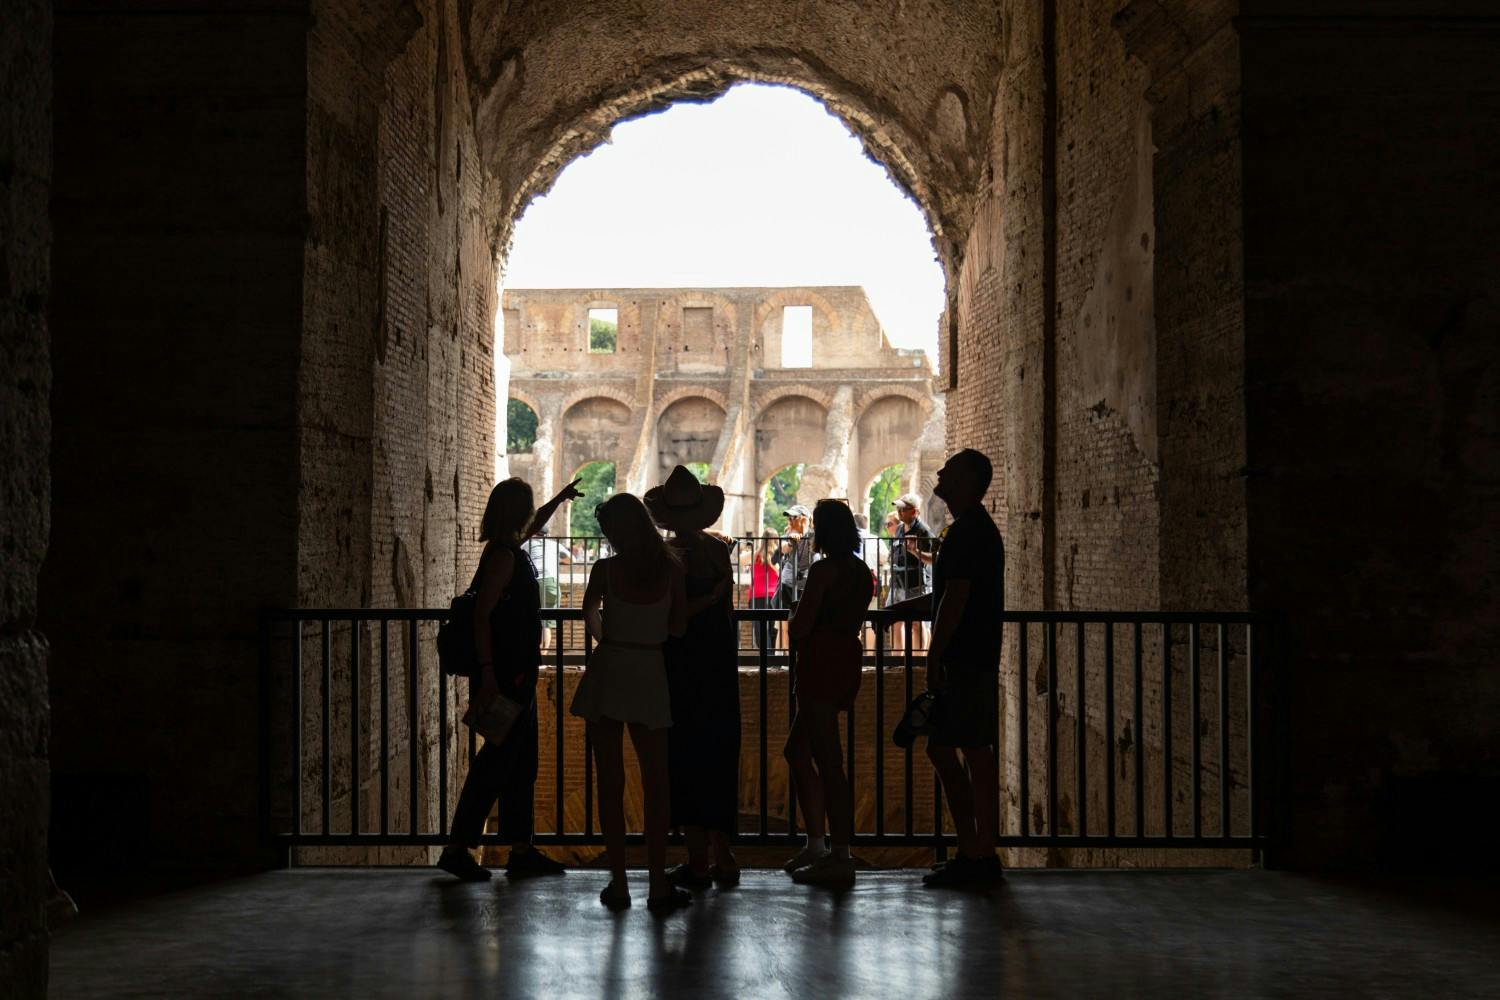 4_Italy_Rome_The Colosseum_29.jpg